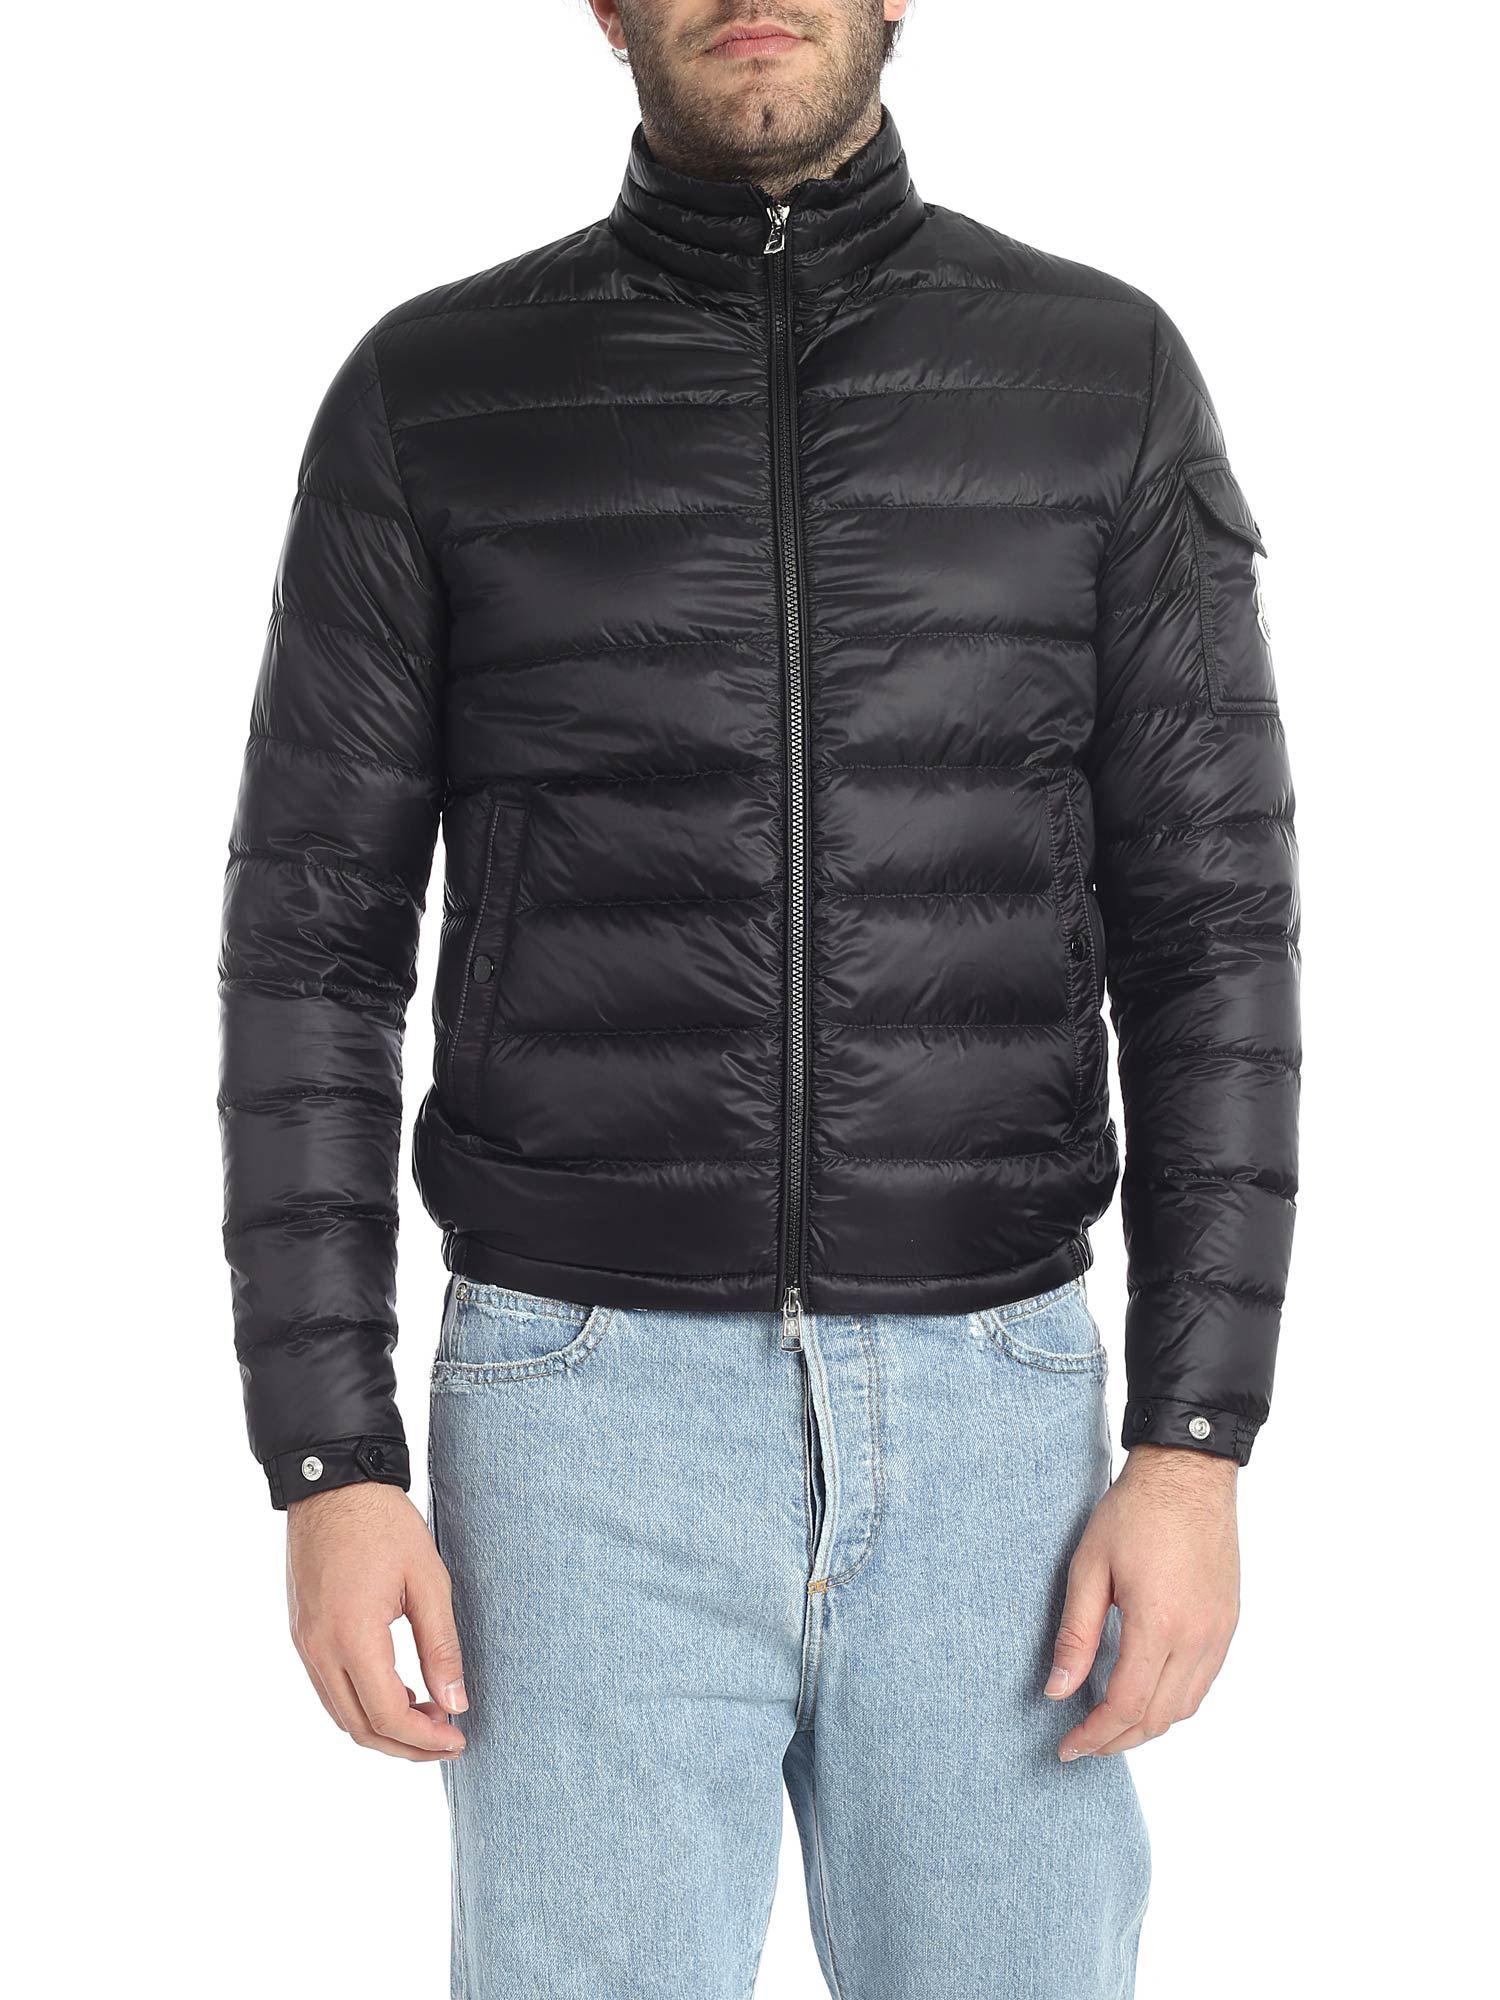 Moncler Synthetic Lambot Black Down Jacket for Men - Lyst